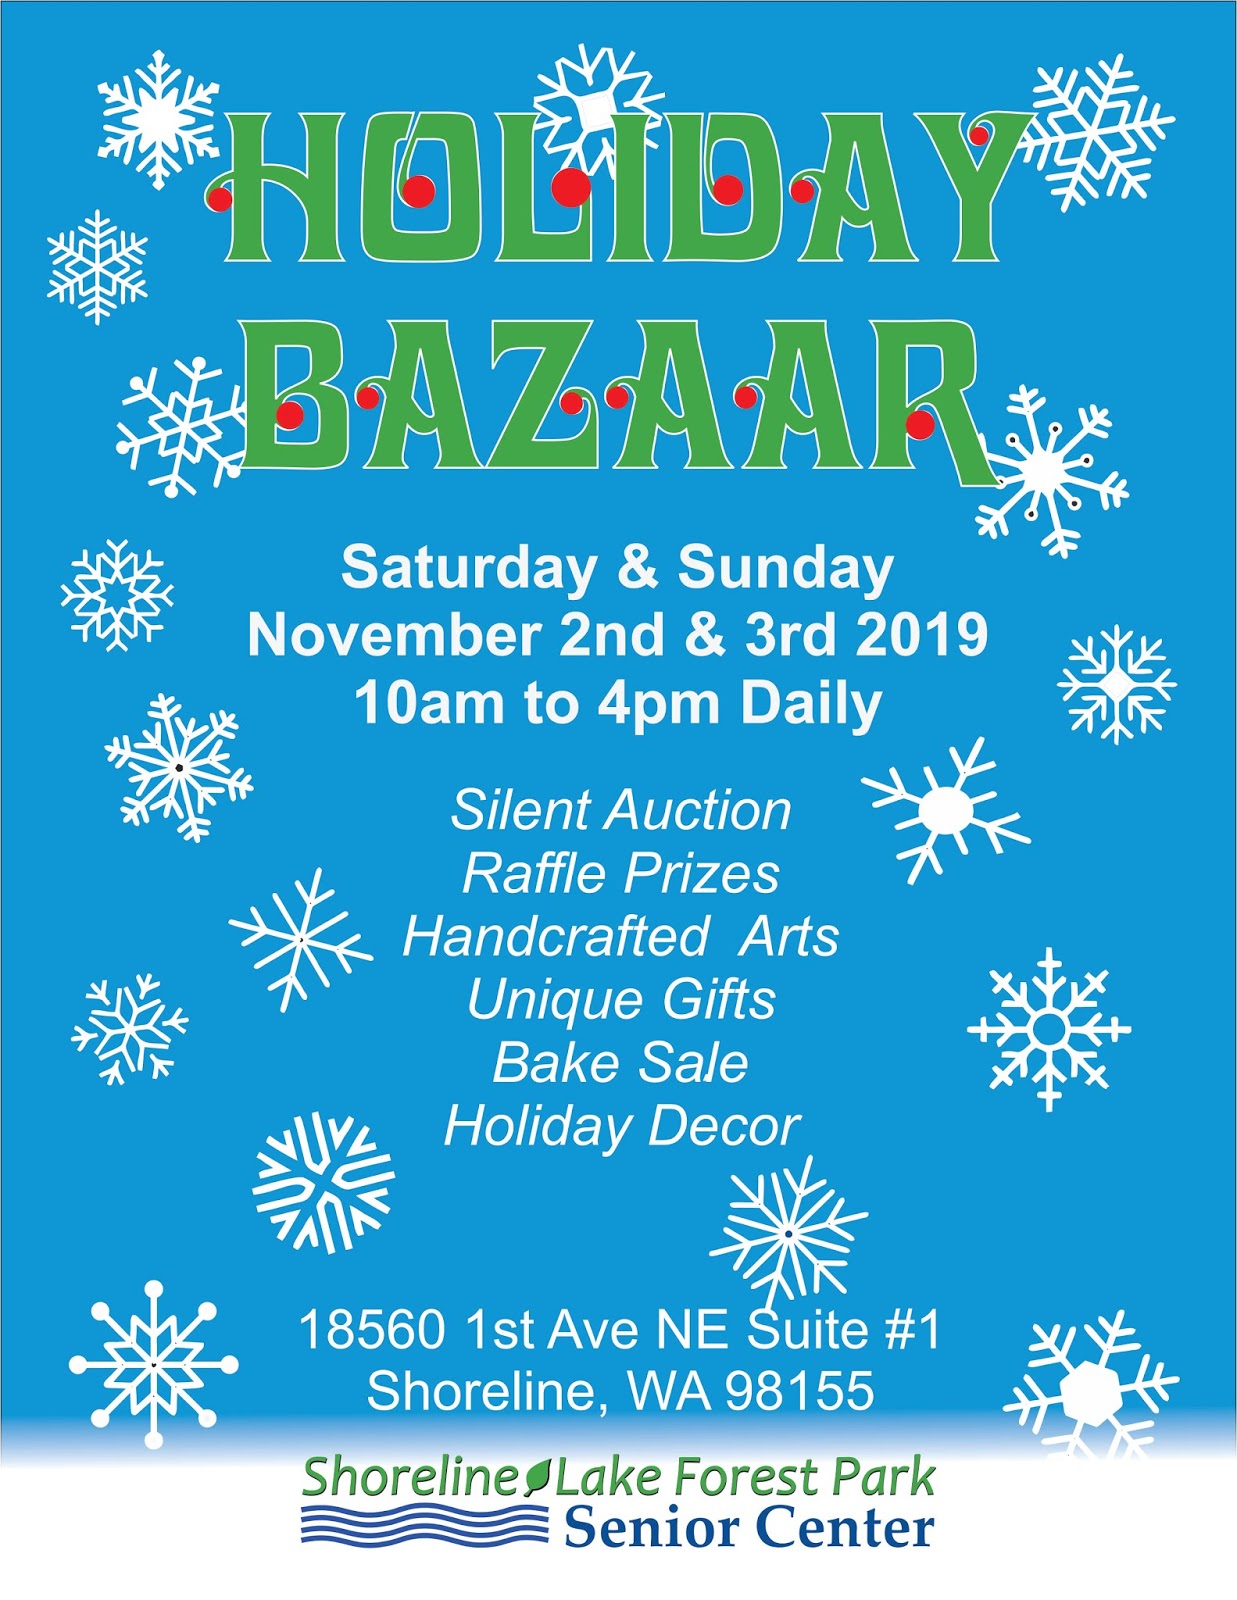 Shoreline Area News Holiday Bazaar at Senior Center Nov 2 3 includes